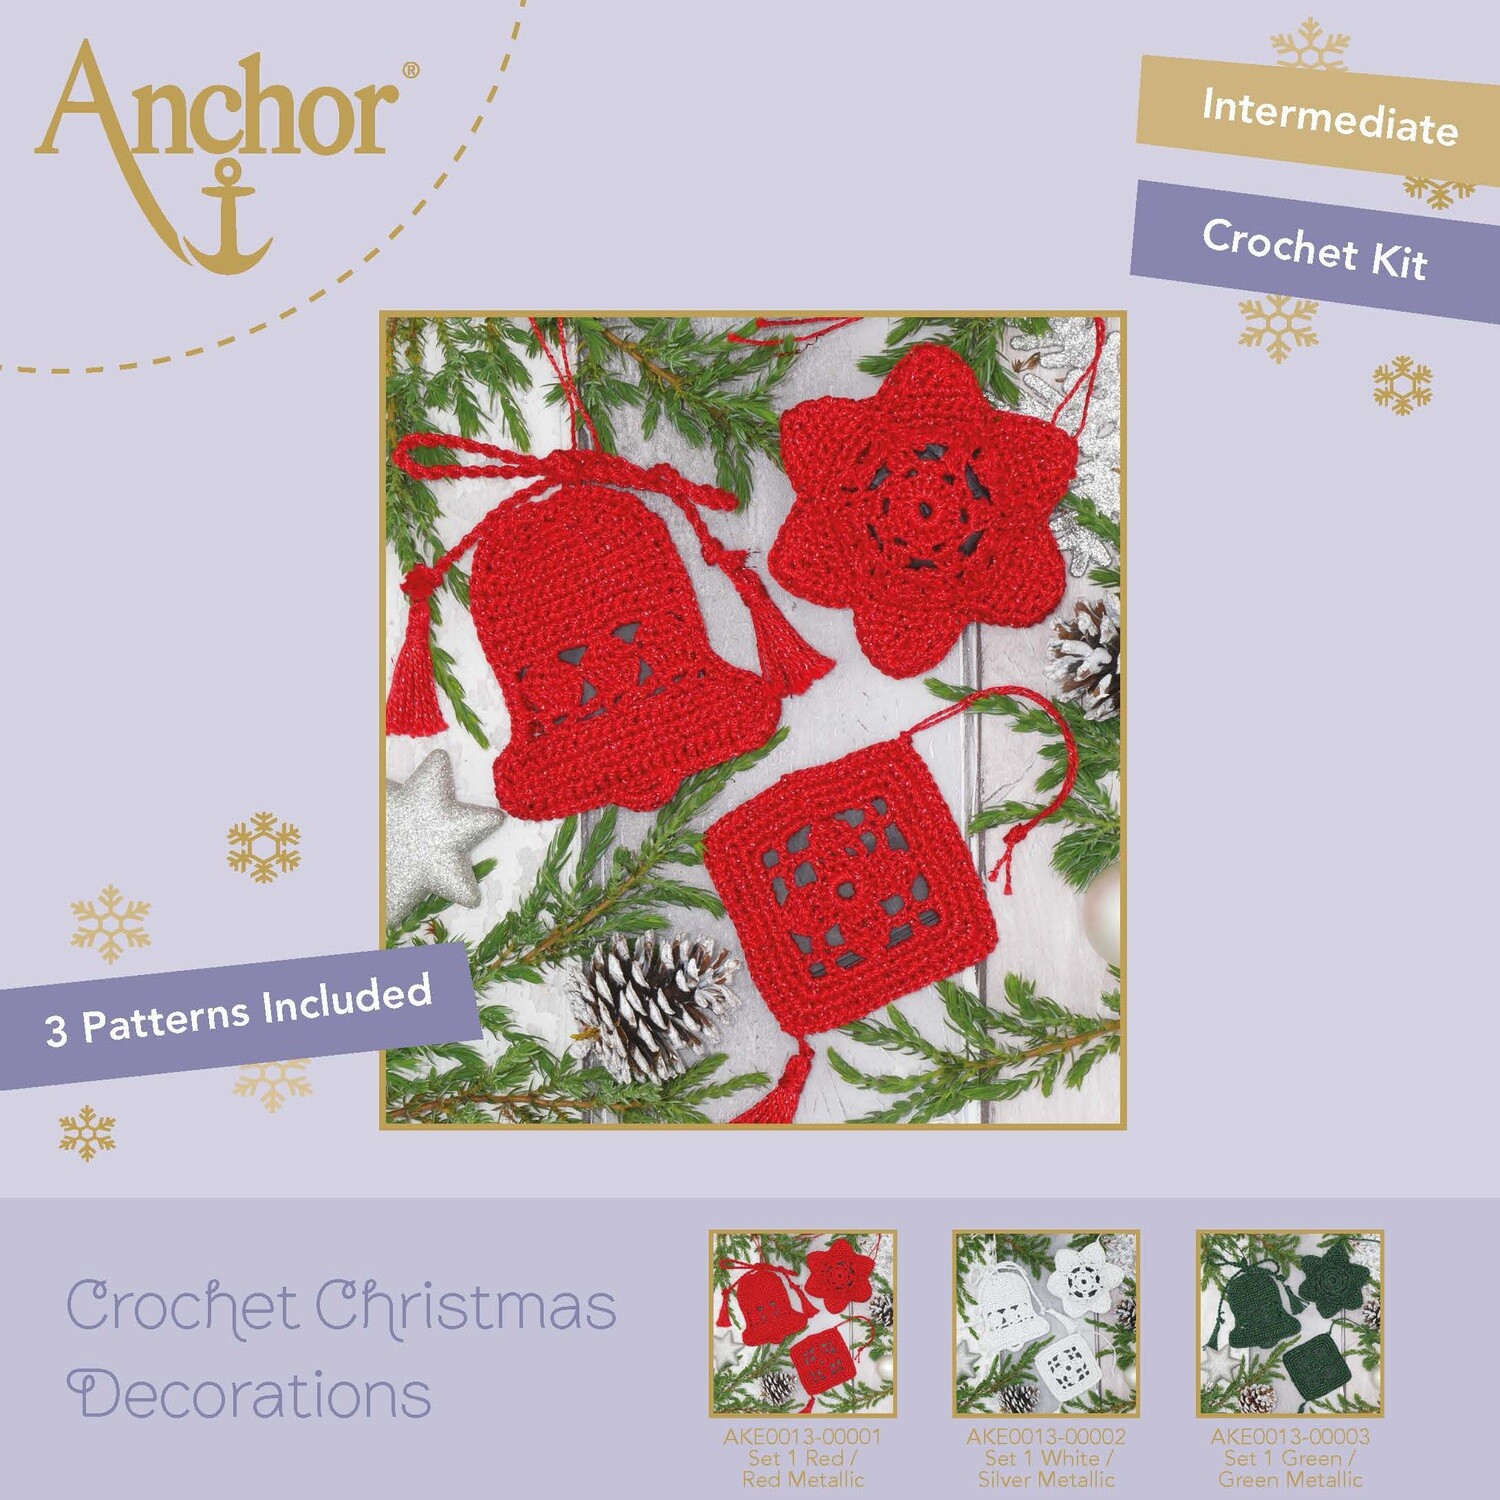 Crochet Christmas Decorations - Set 1 Red/Gold Metallic